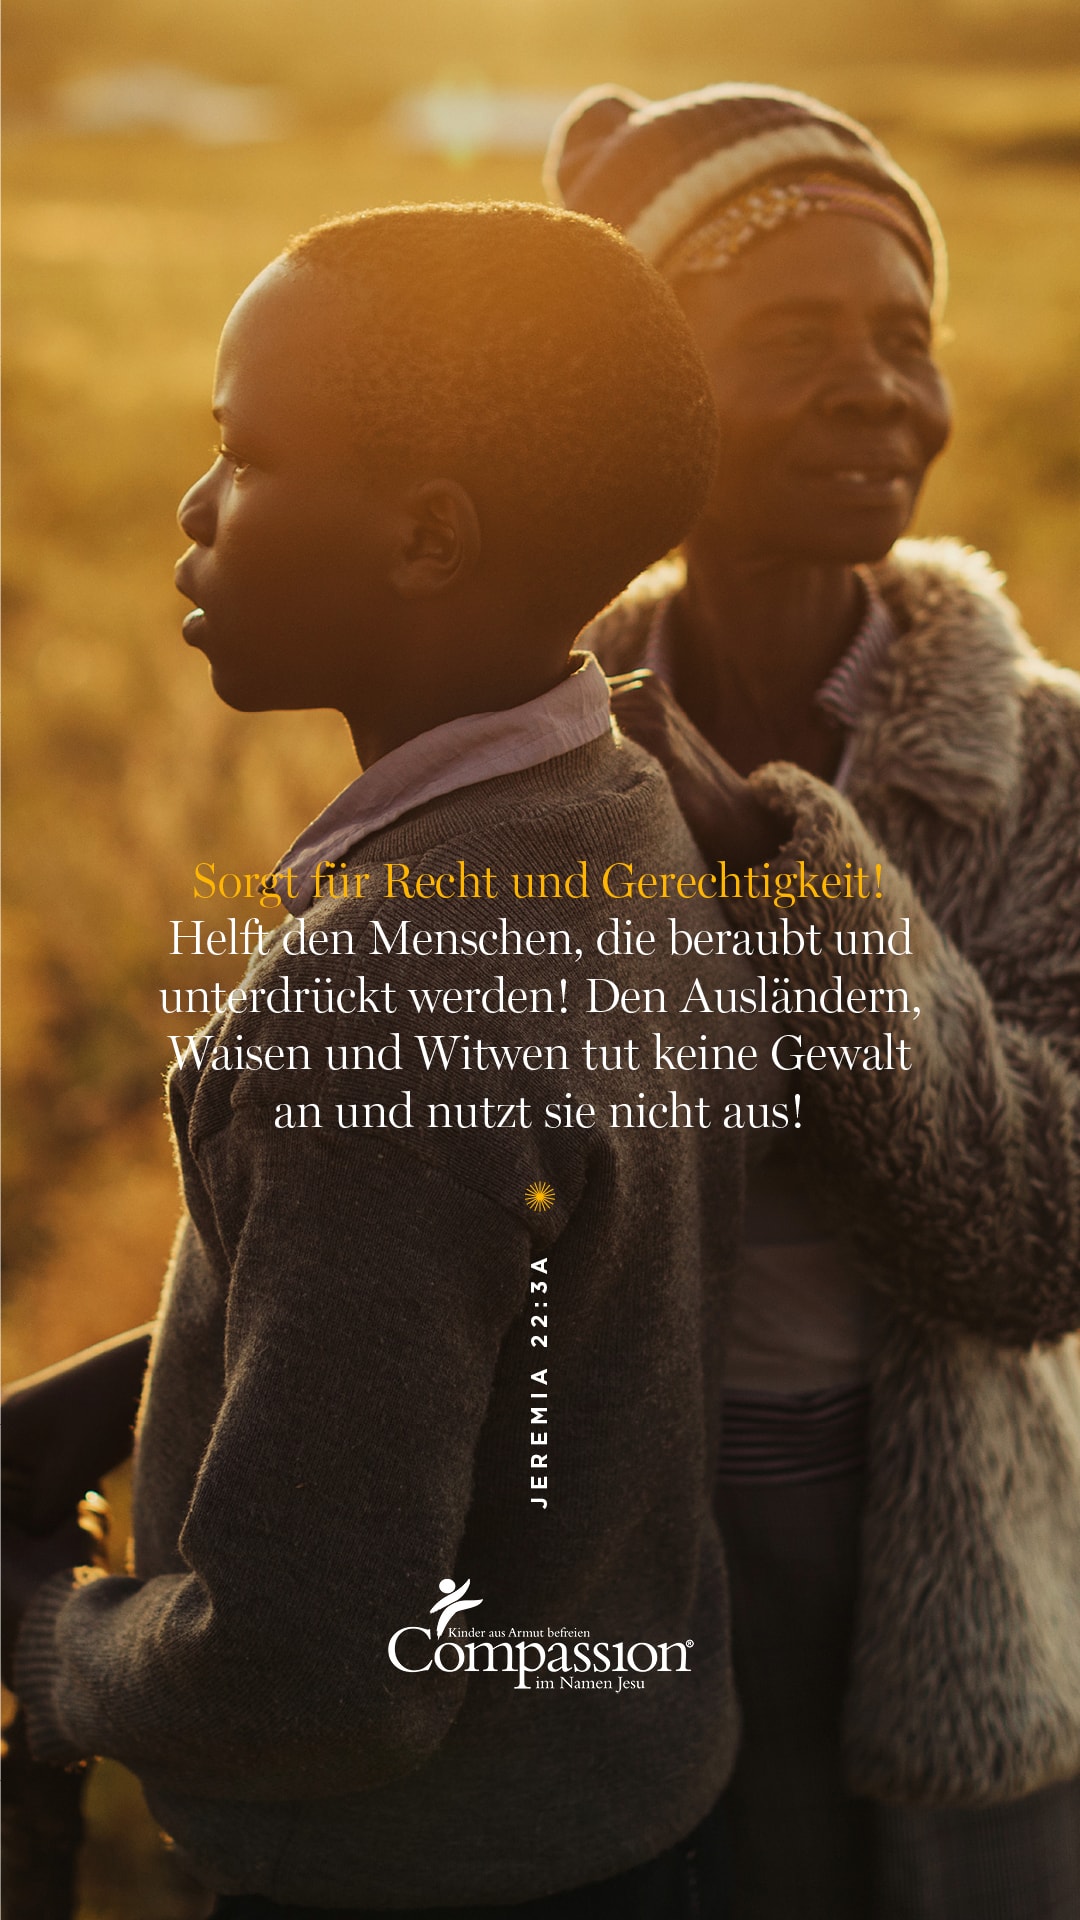 alt="Jeremia_22_3a_Wallpaper_Compassion_Deutschland"